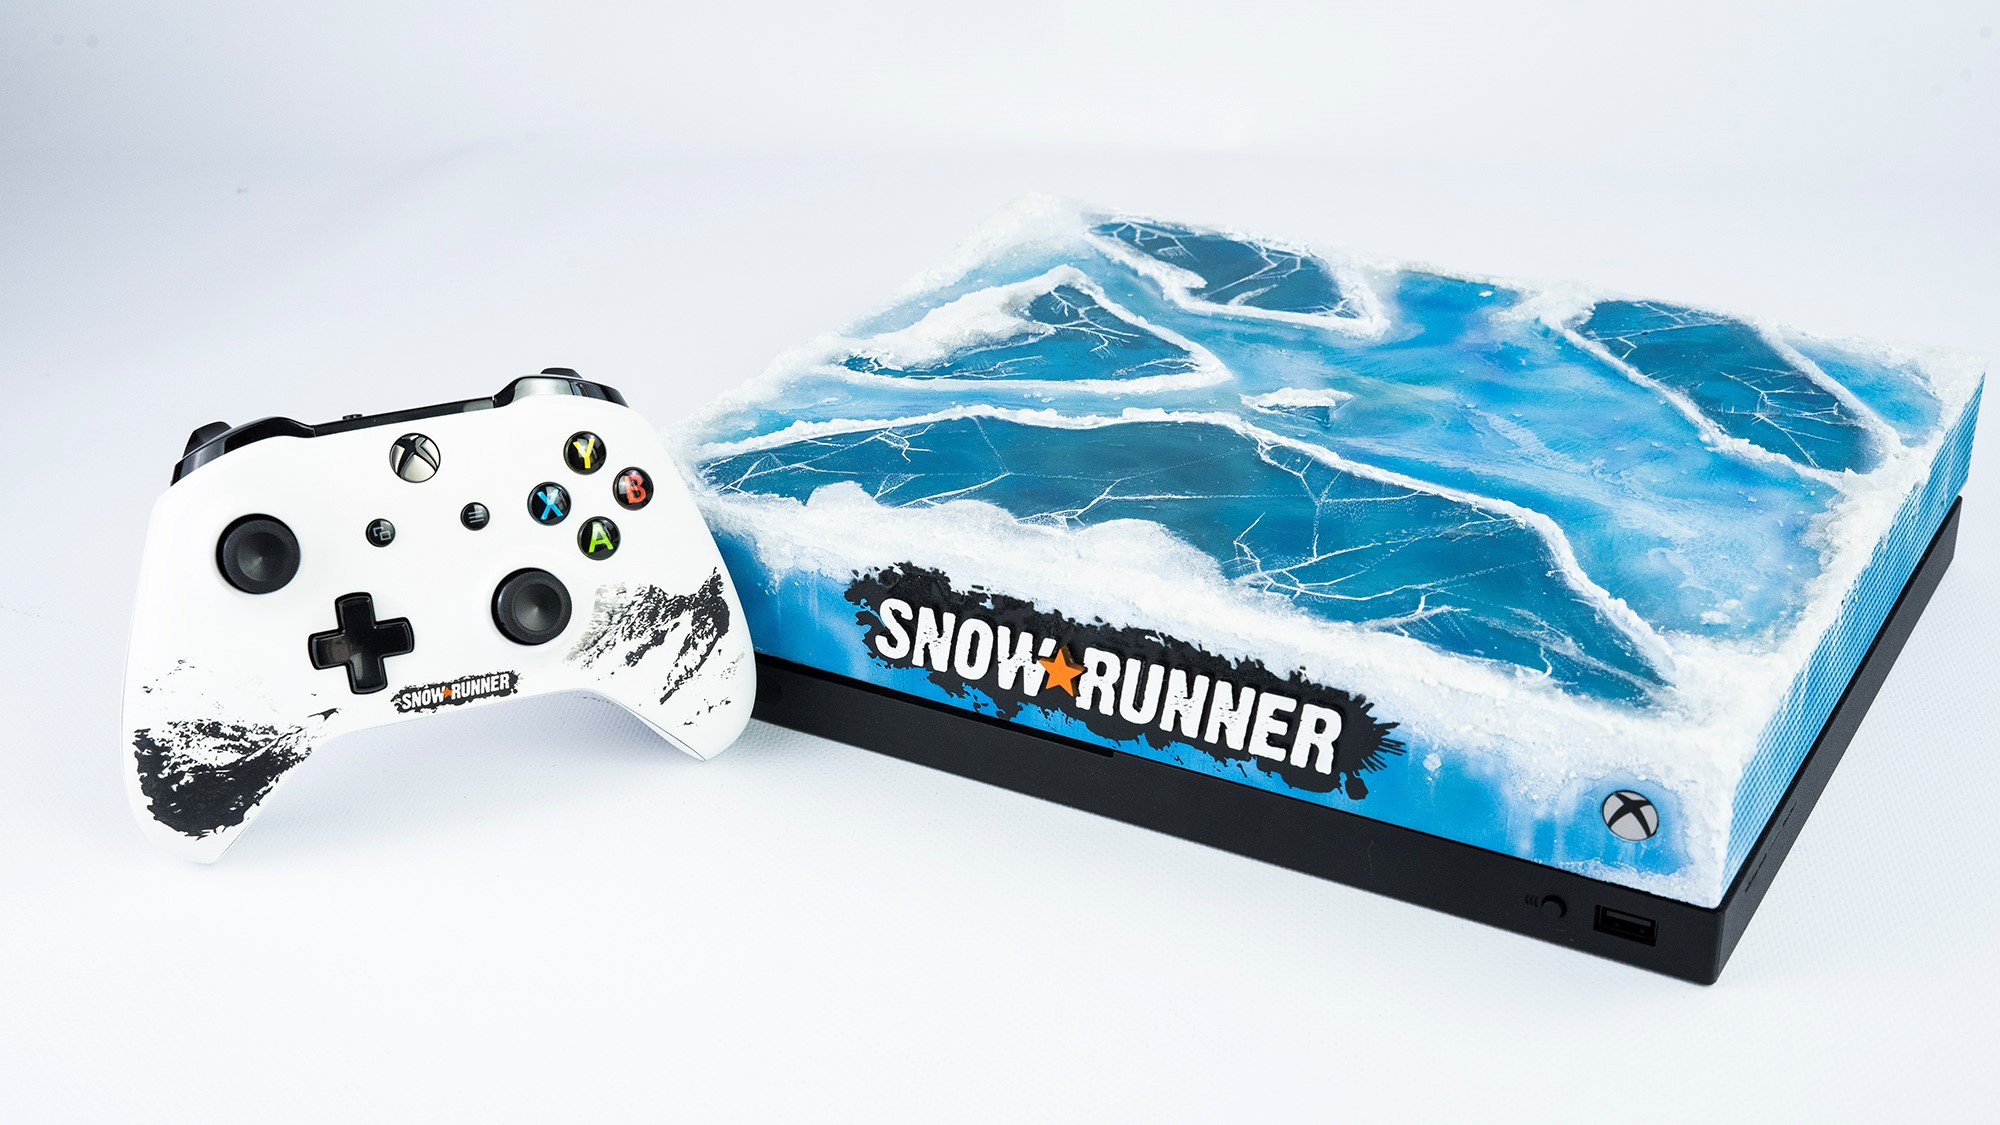 snowrunner xbox 1